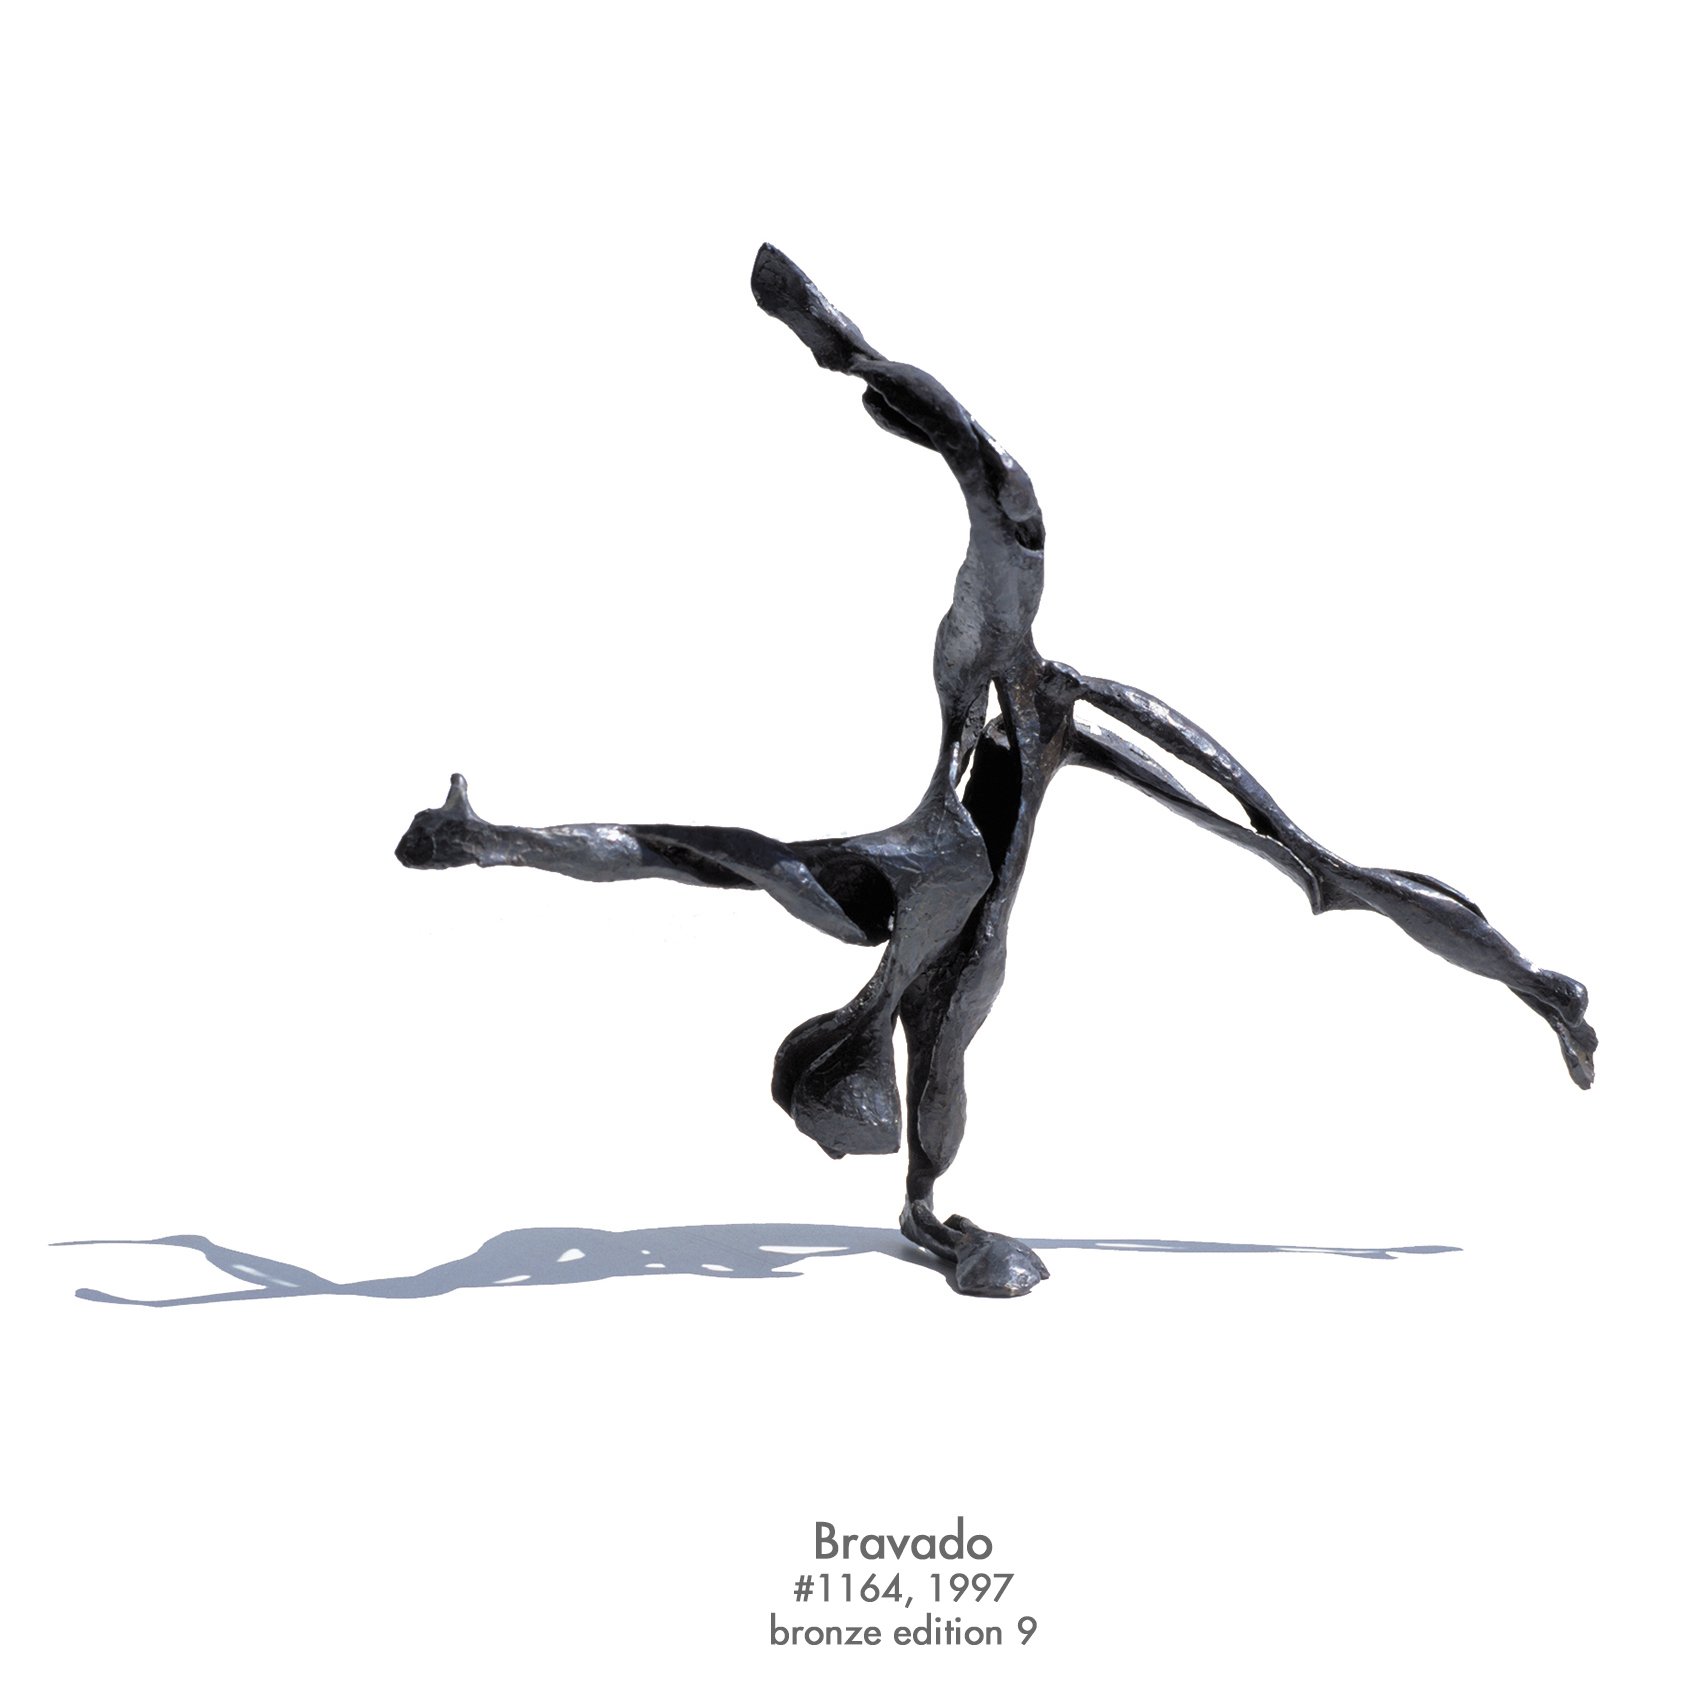 Bravado, 1997, bronze, #164